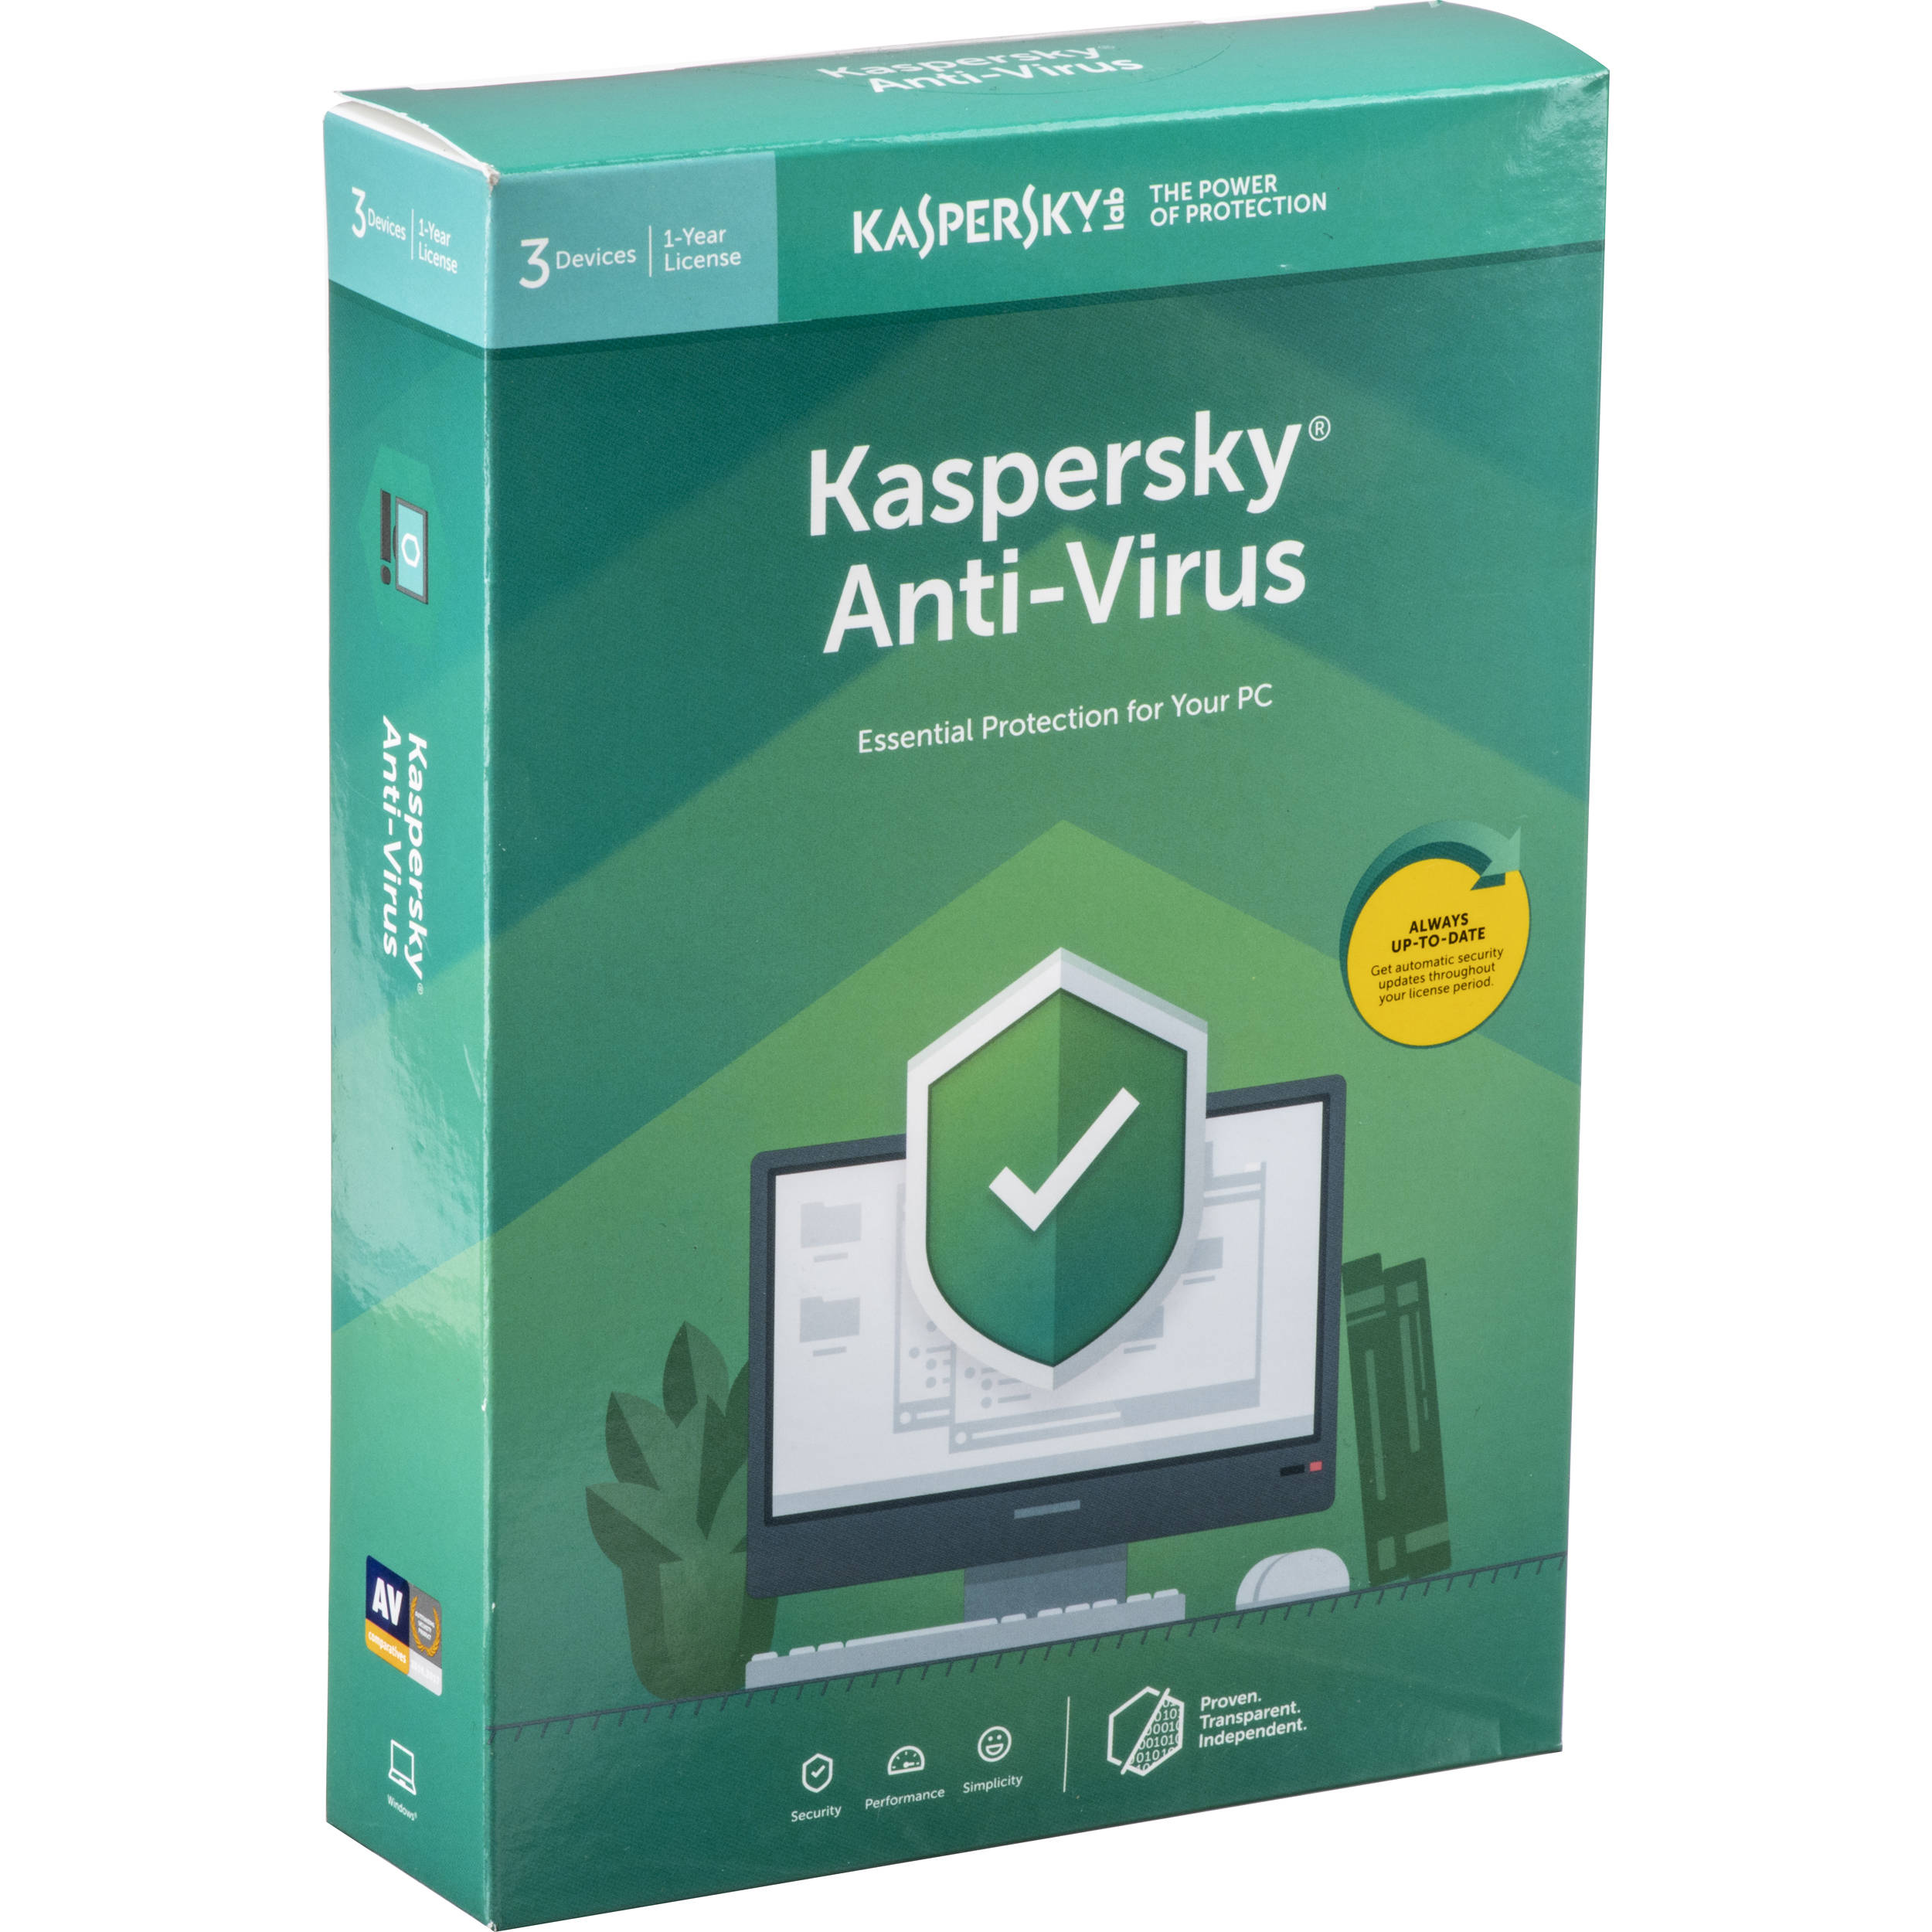 Хороший антивирус на компьютер. Антивирус Касперского. Kaspersky антивирус. Антивирусная программа Касперский. Касперский Базовая защита.